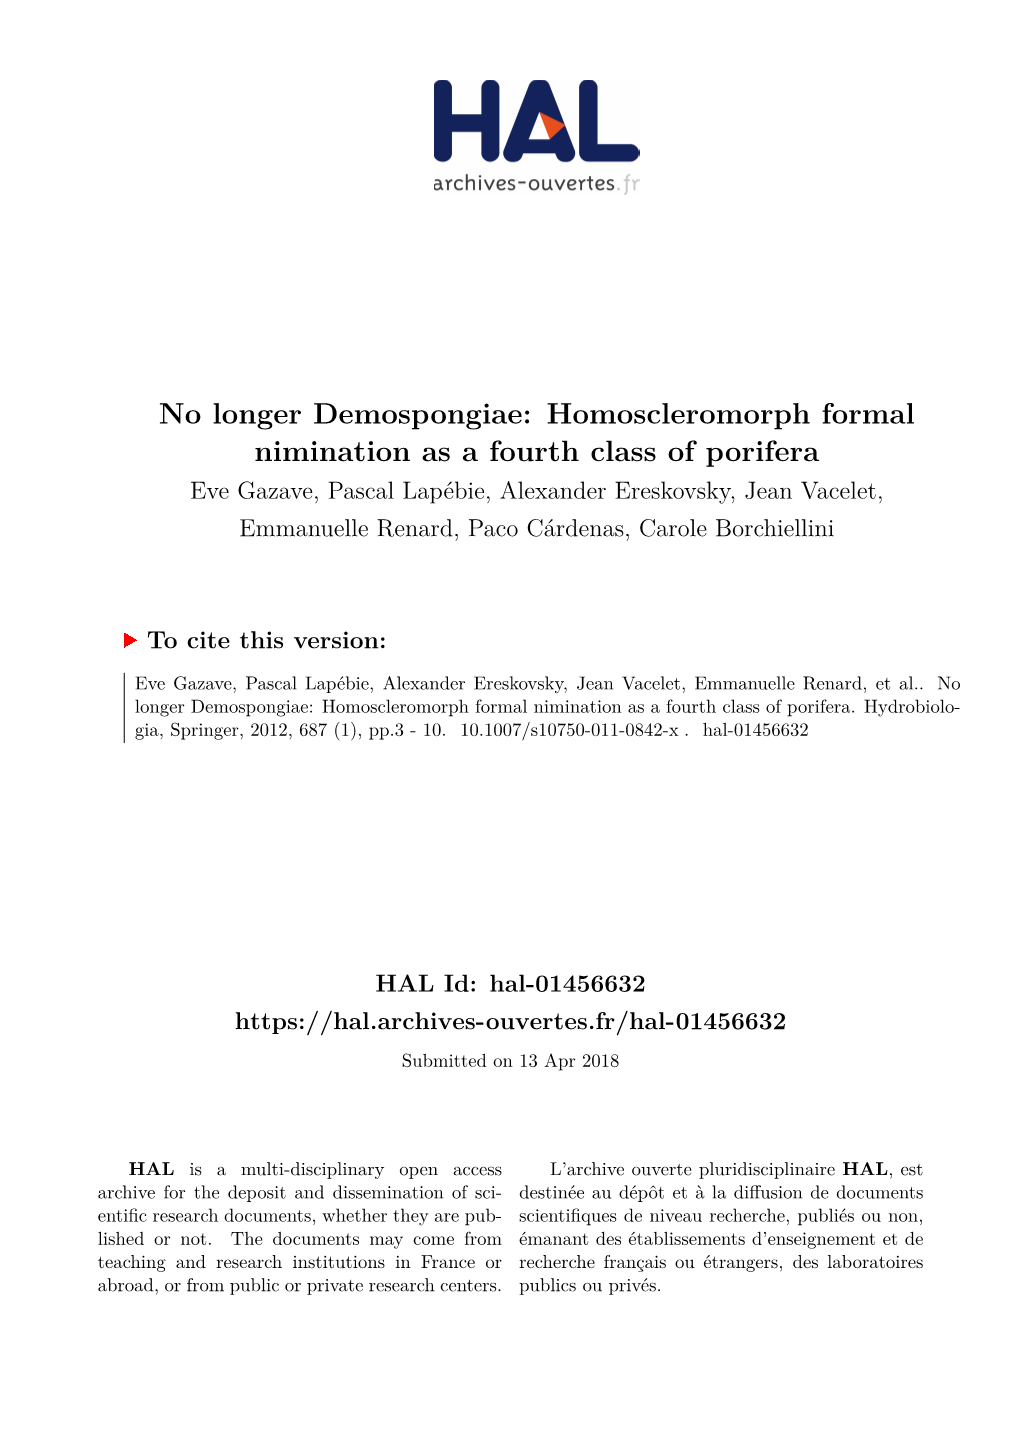 Homoscleromorph Formal Nimination As a Fourth Class of Porifera